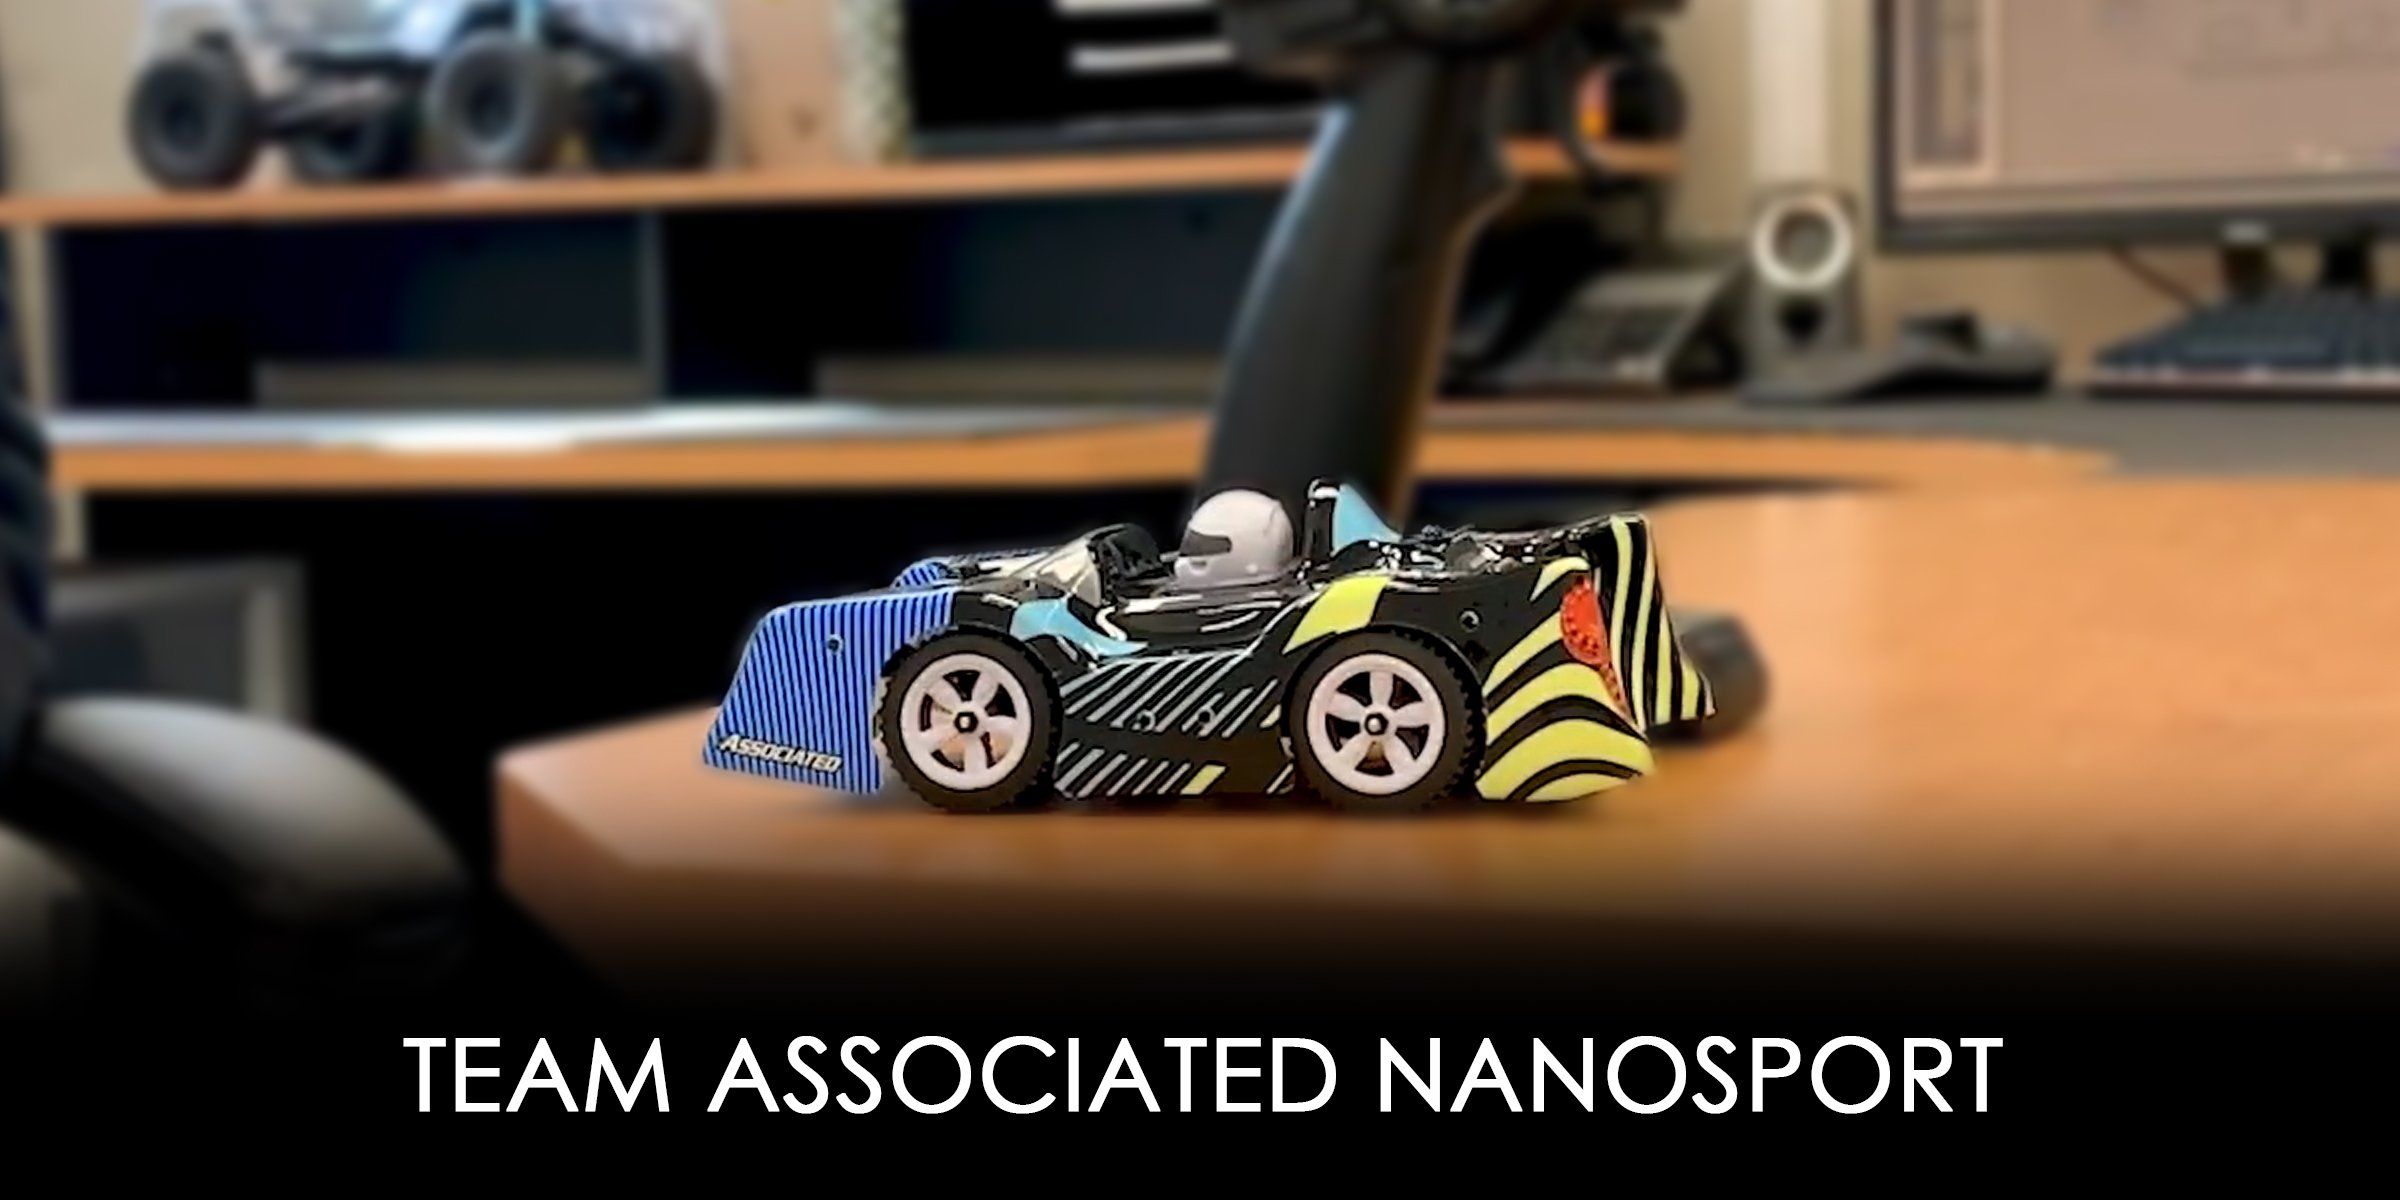 Top 10 Indoor RC Cars - #5 Team Associated NanoSport 1:32 Scale Vehicles